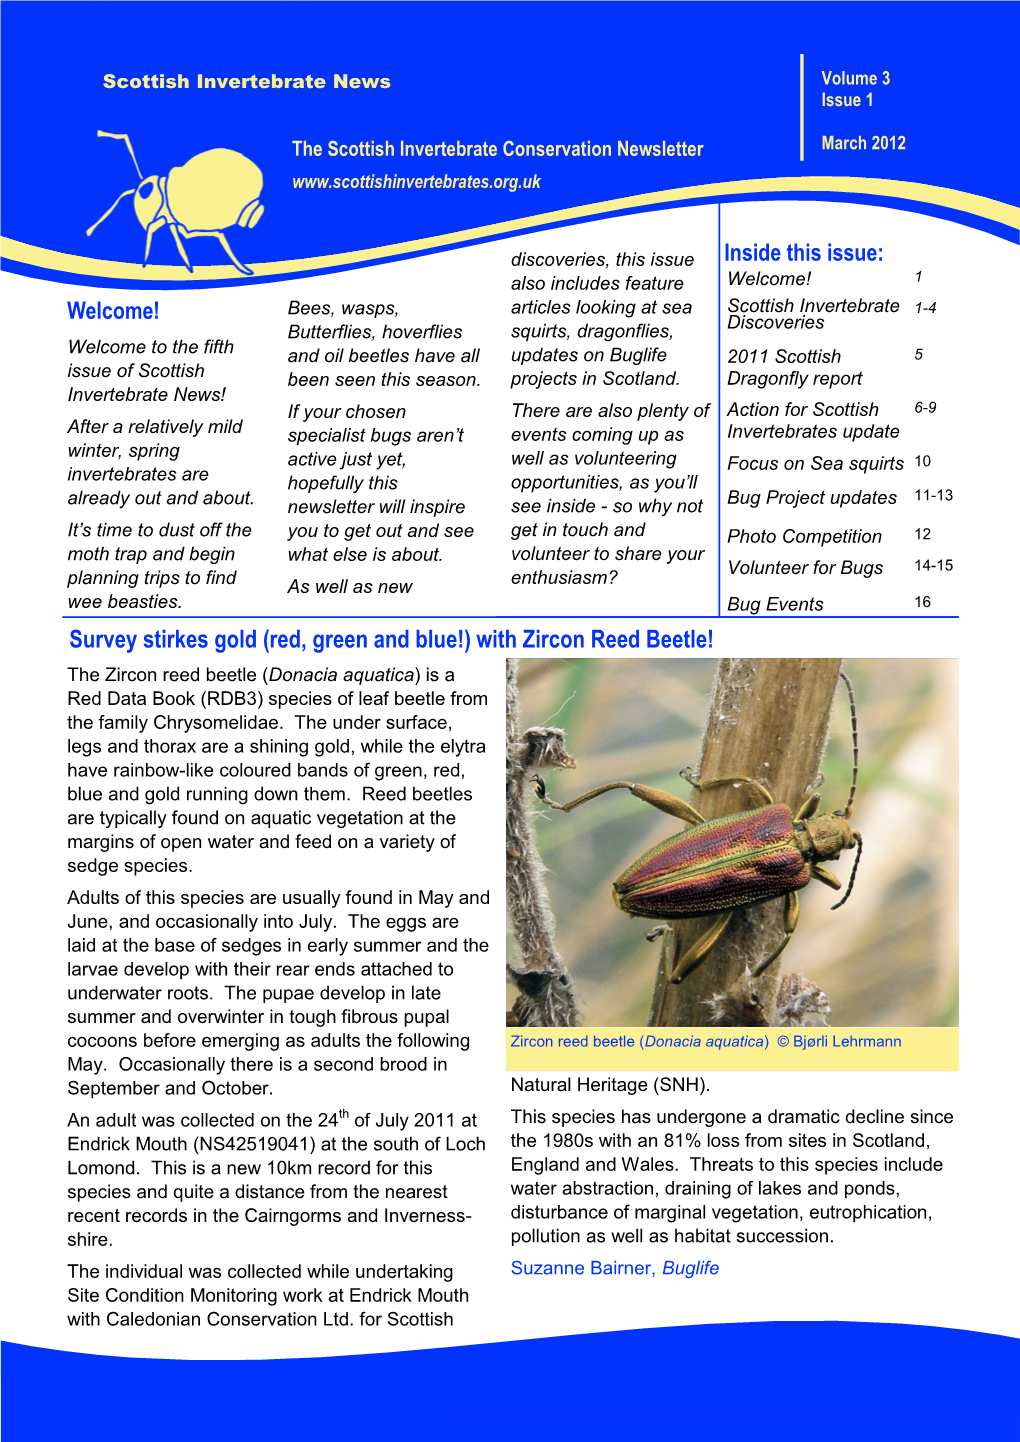 The Scottish Invertebrate Conservation Newsletter March 2012